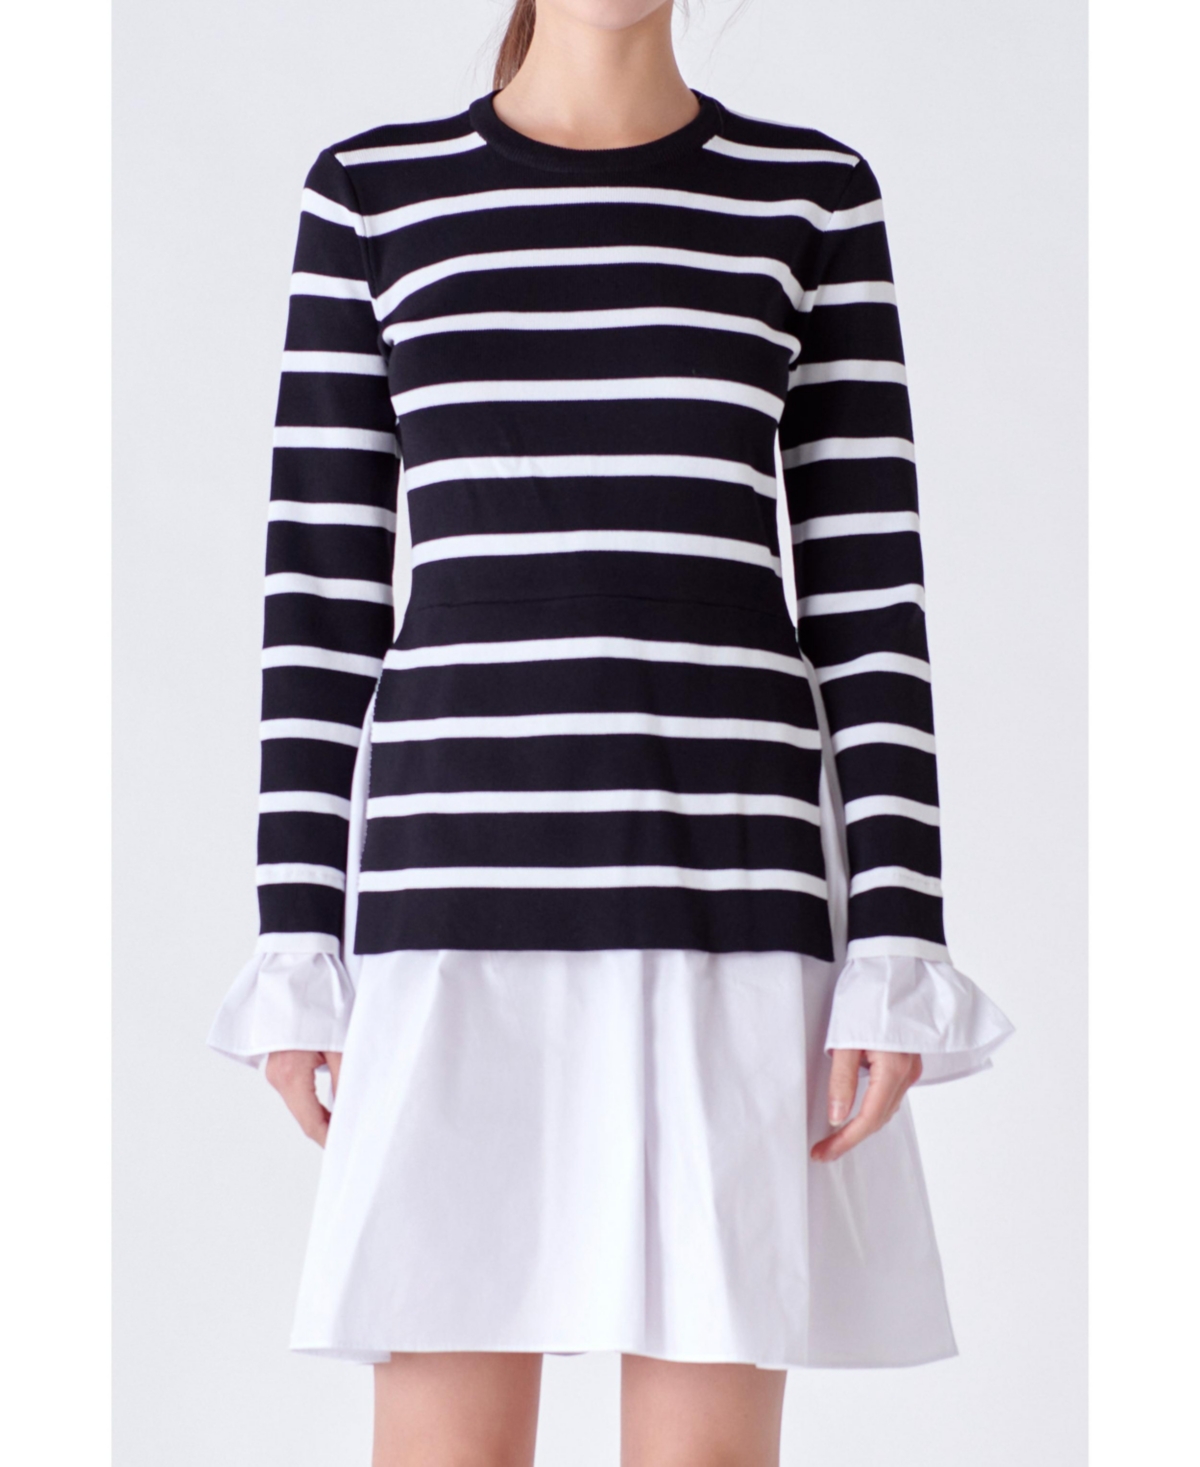 Great Gatsby Dress – Great Gatsby Dresses for Sale Womens Poplin Combo Knit Dress - Black stripe $90.00 AT vintagedancer.com